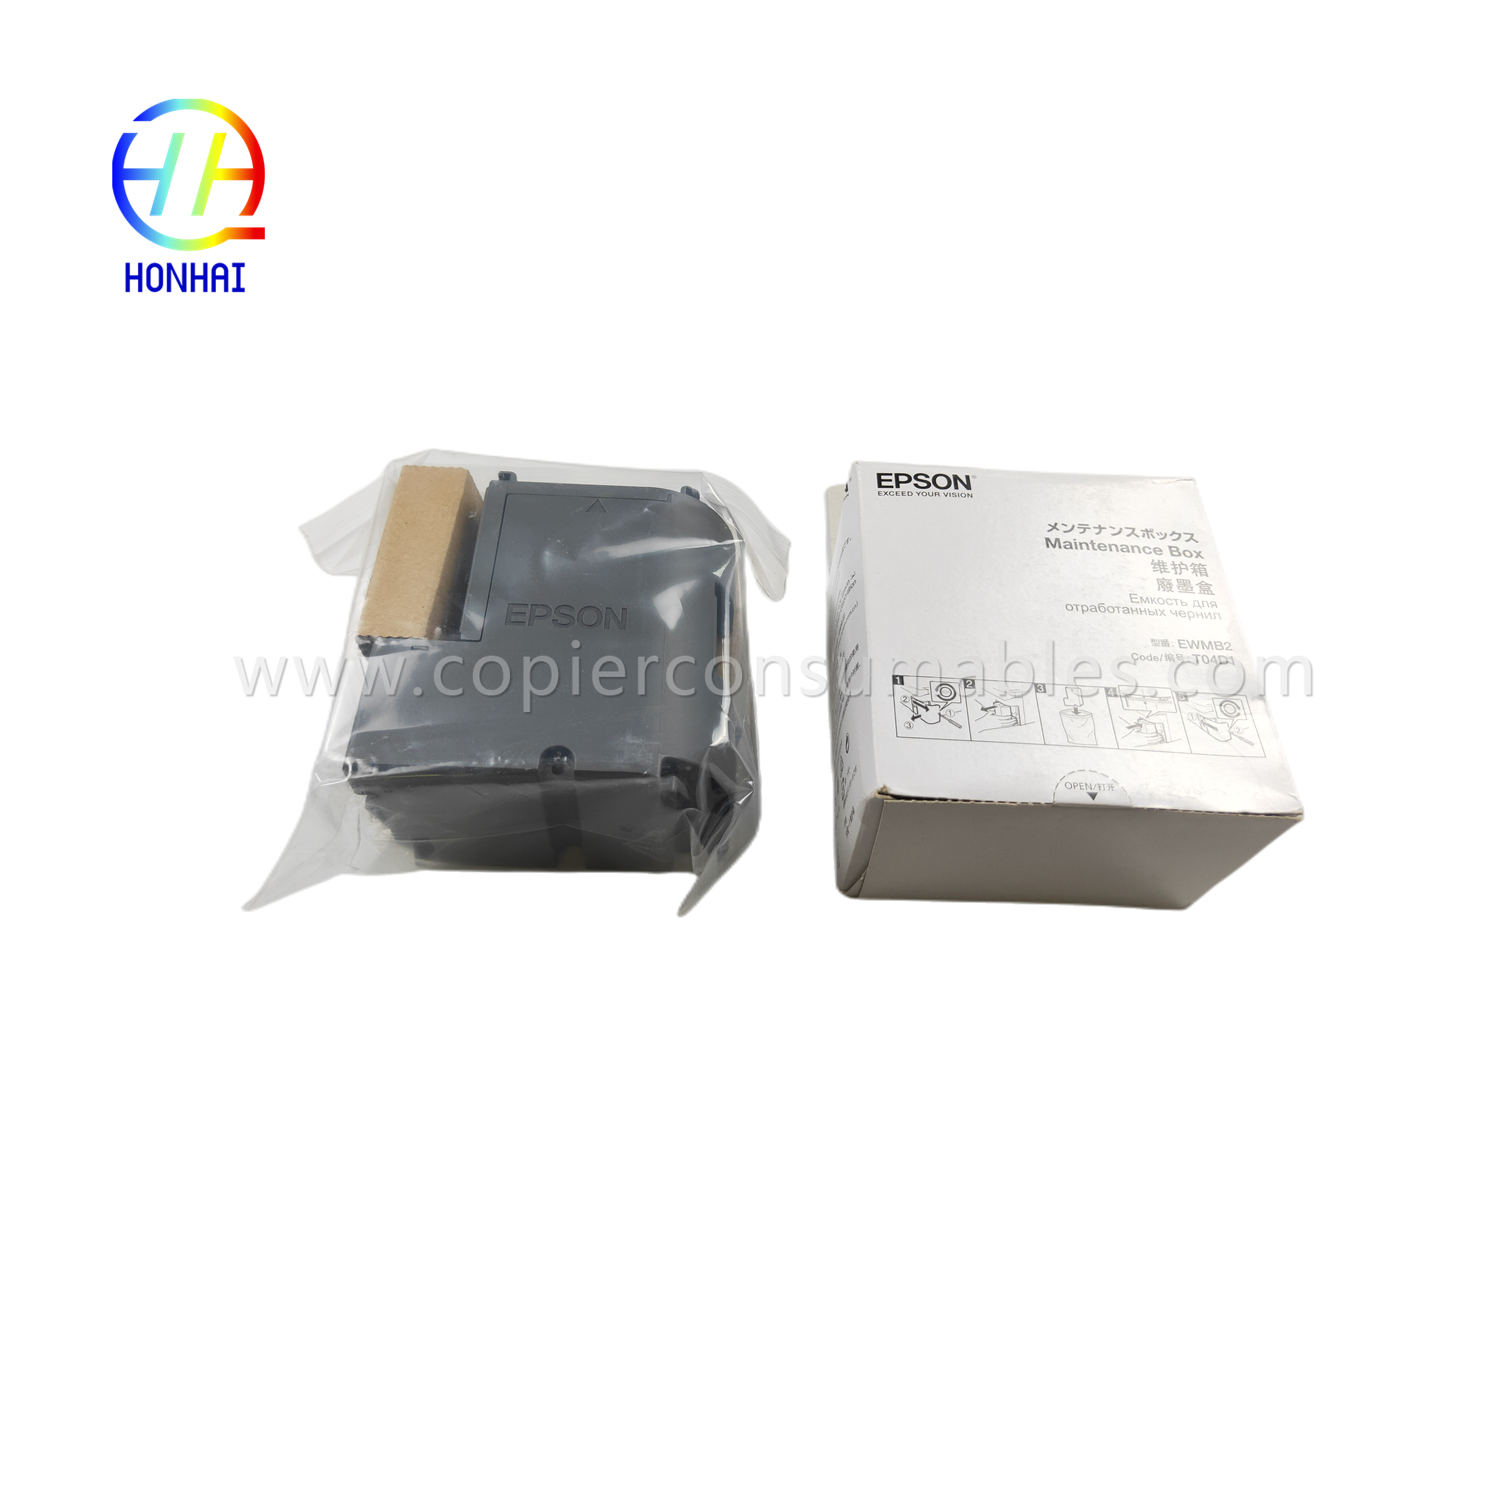 Caixa de mantemento orixinal para Epson L6160 L6170 L6190 M1140